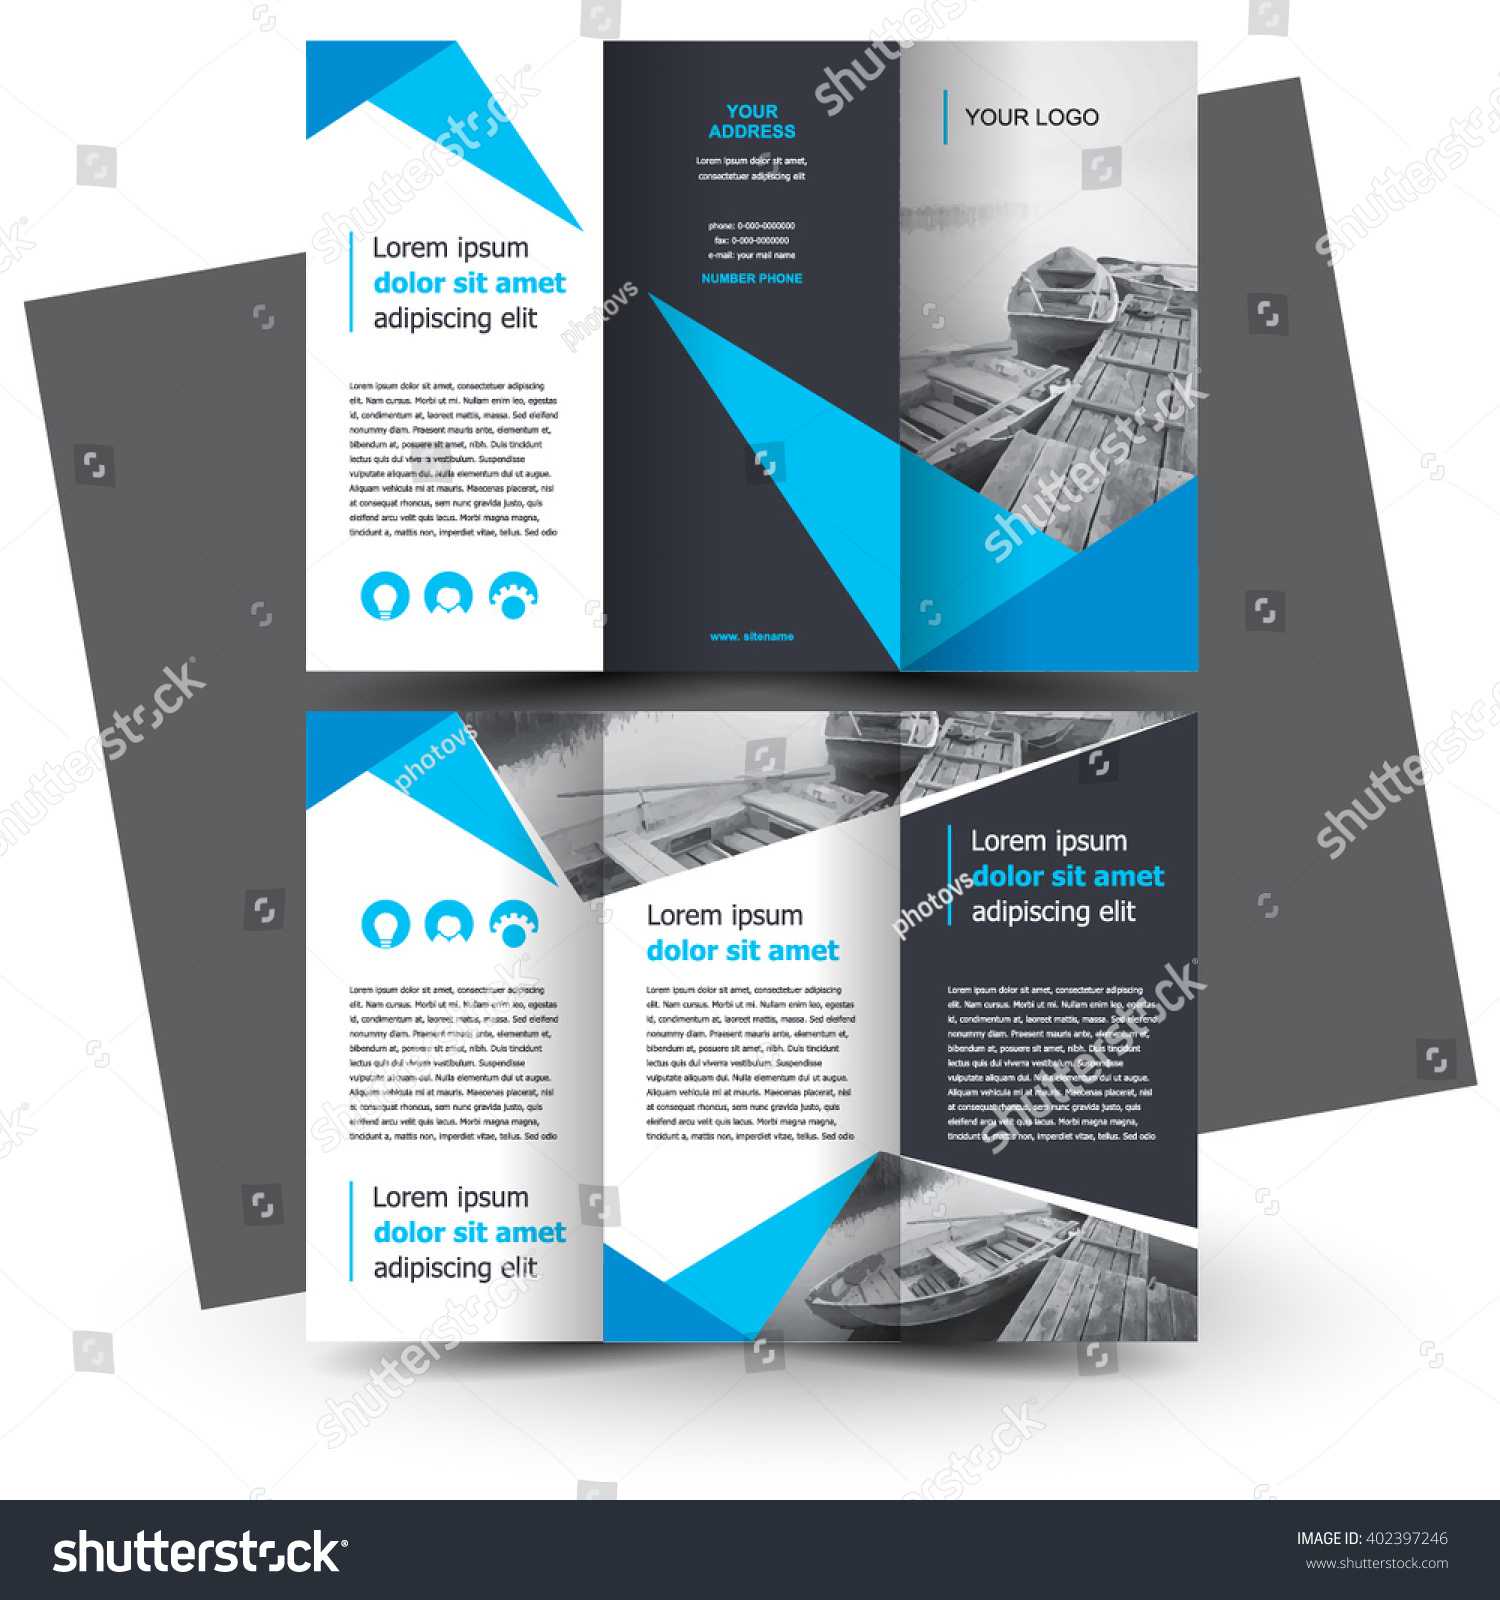 Catalog Design Templates Free Download ] – Brochure Design Within Engineering Brochure Templates Free Download